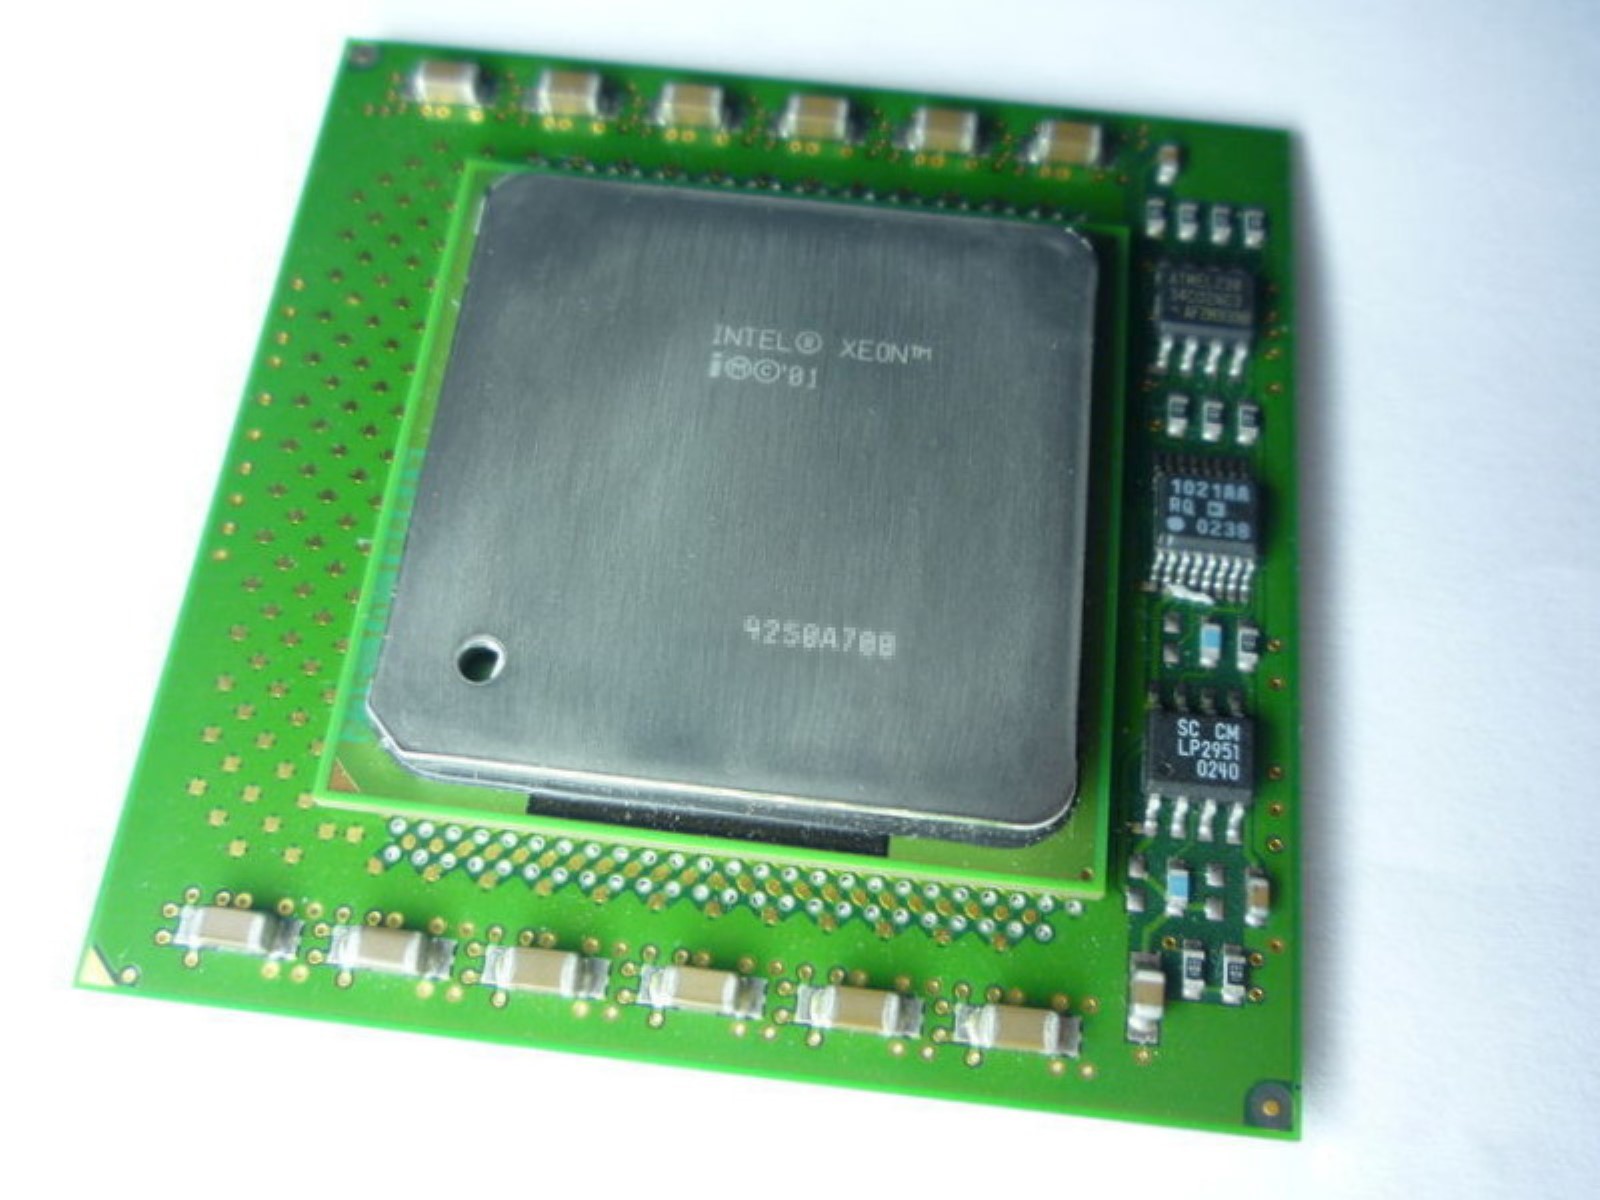 Intel Xeon 603 2.0GHz CPU